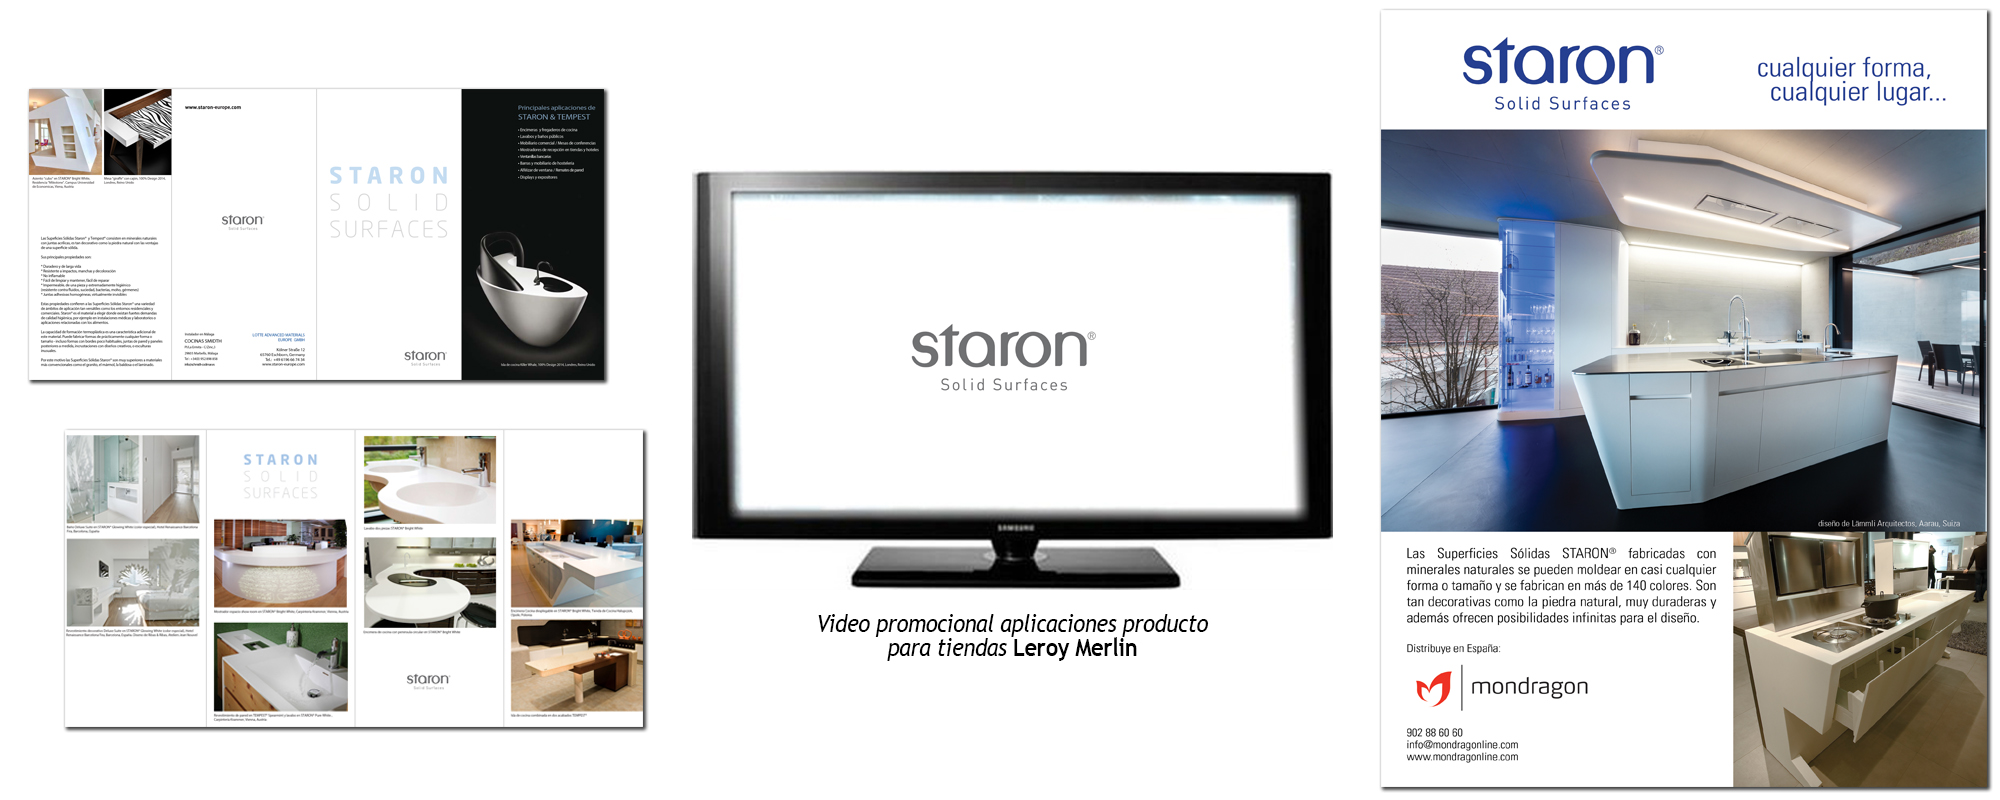 Anuncio + Video promocional Staron - Mondragón